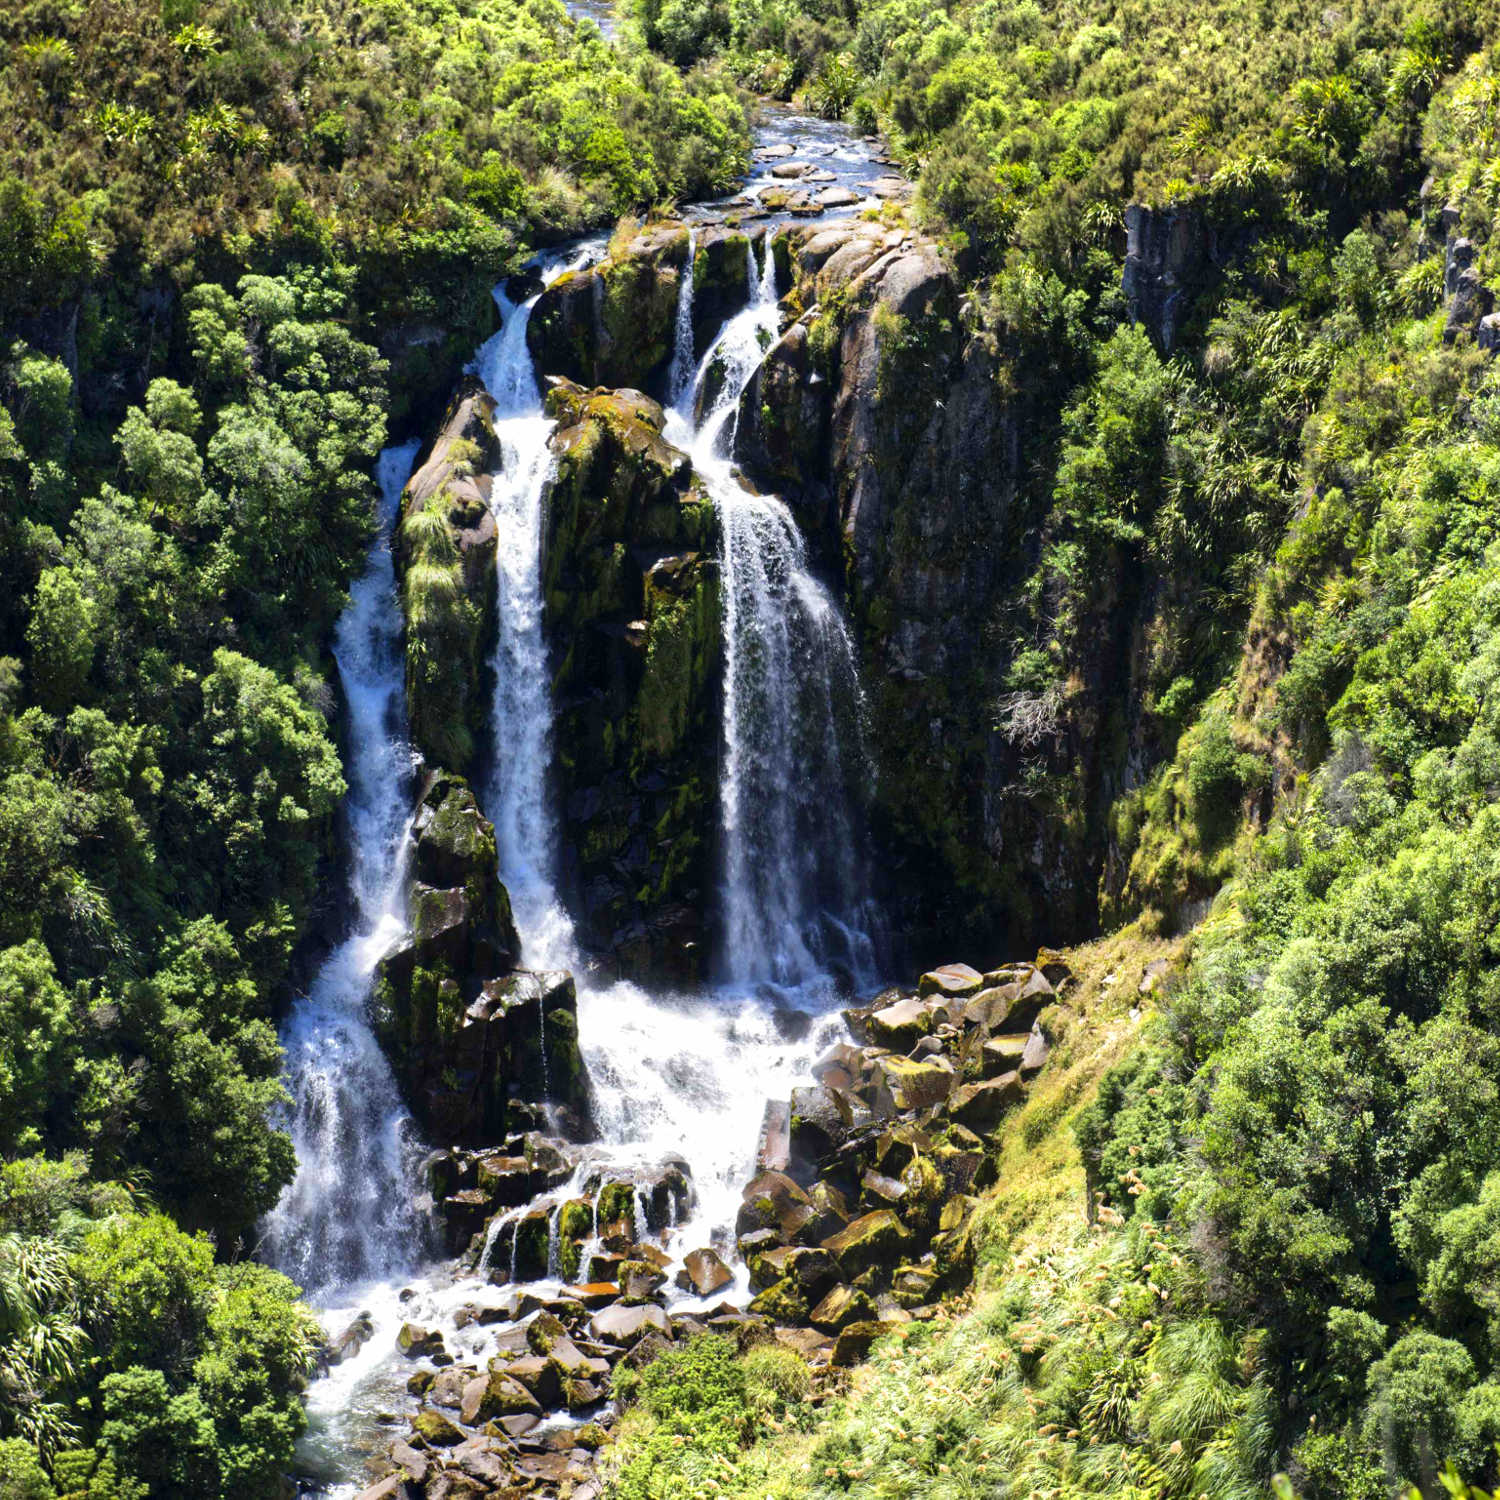 Waipunga Falls on the Waipunga River, west of Taupo